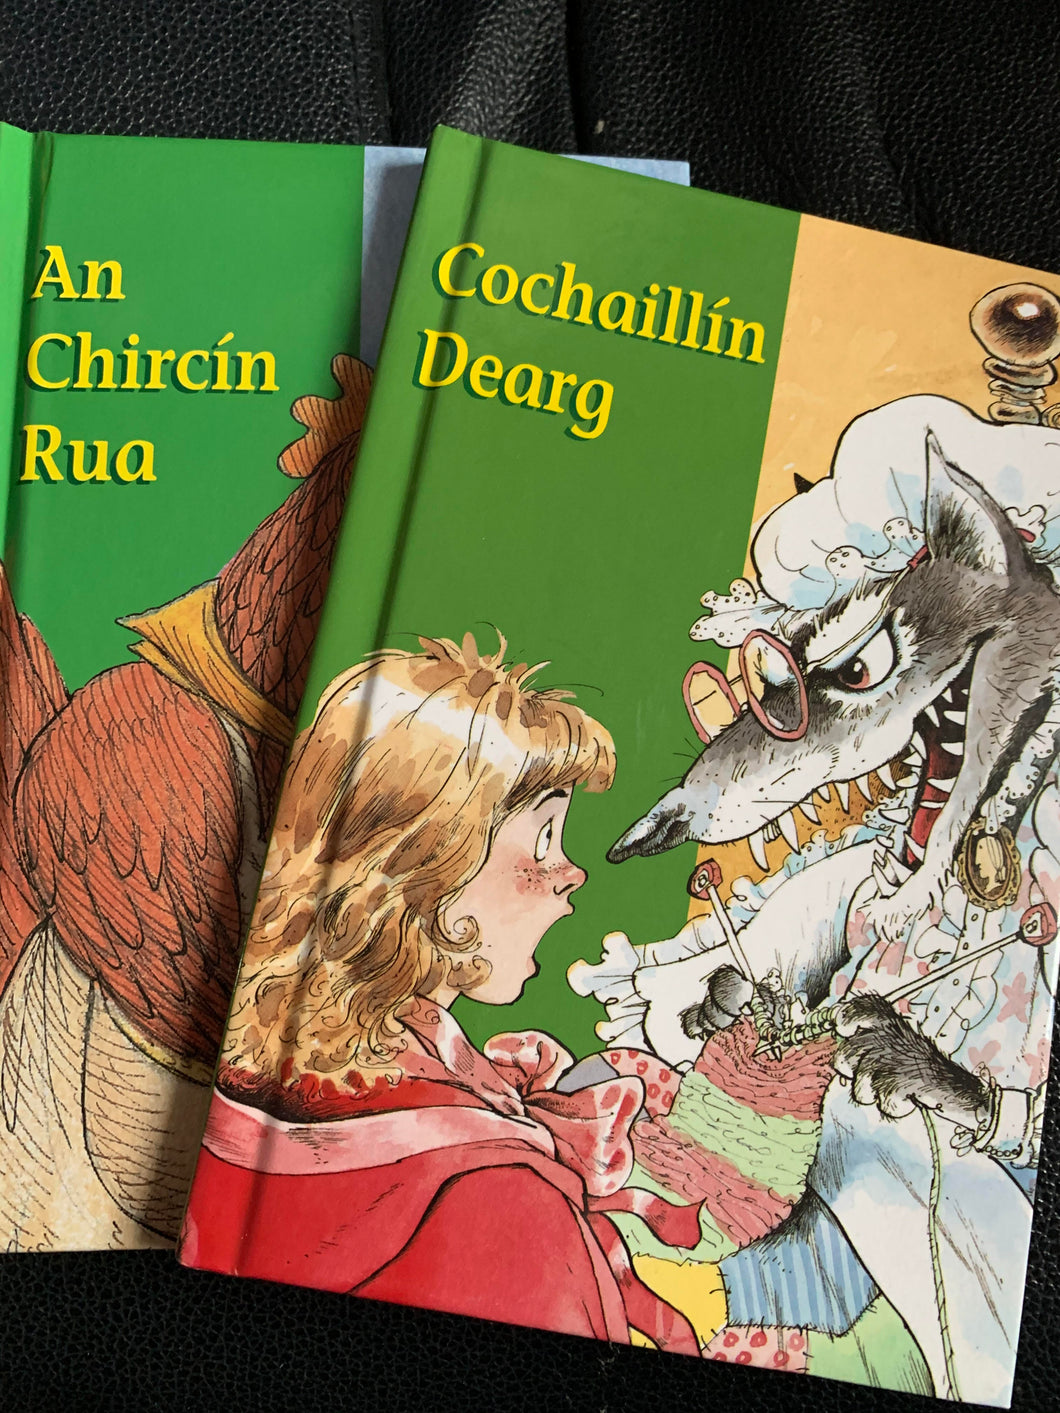 Book : Irish Language Books for Children.